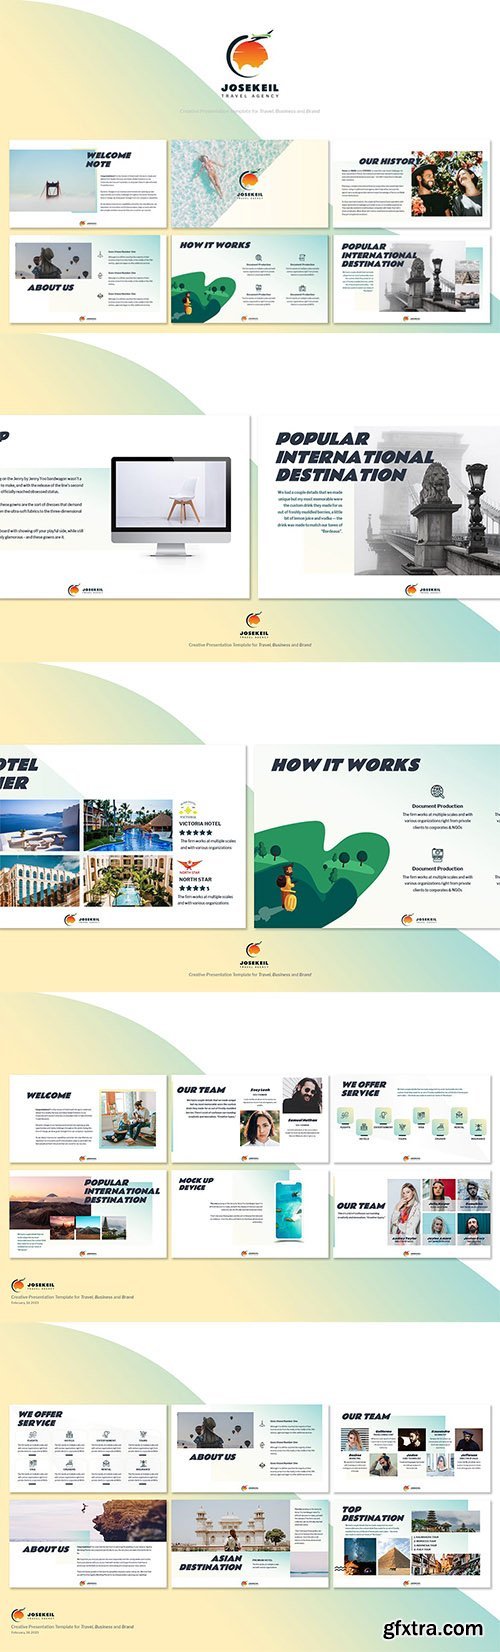 Josekeil - Travel Agency Keynote Template